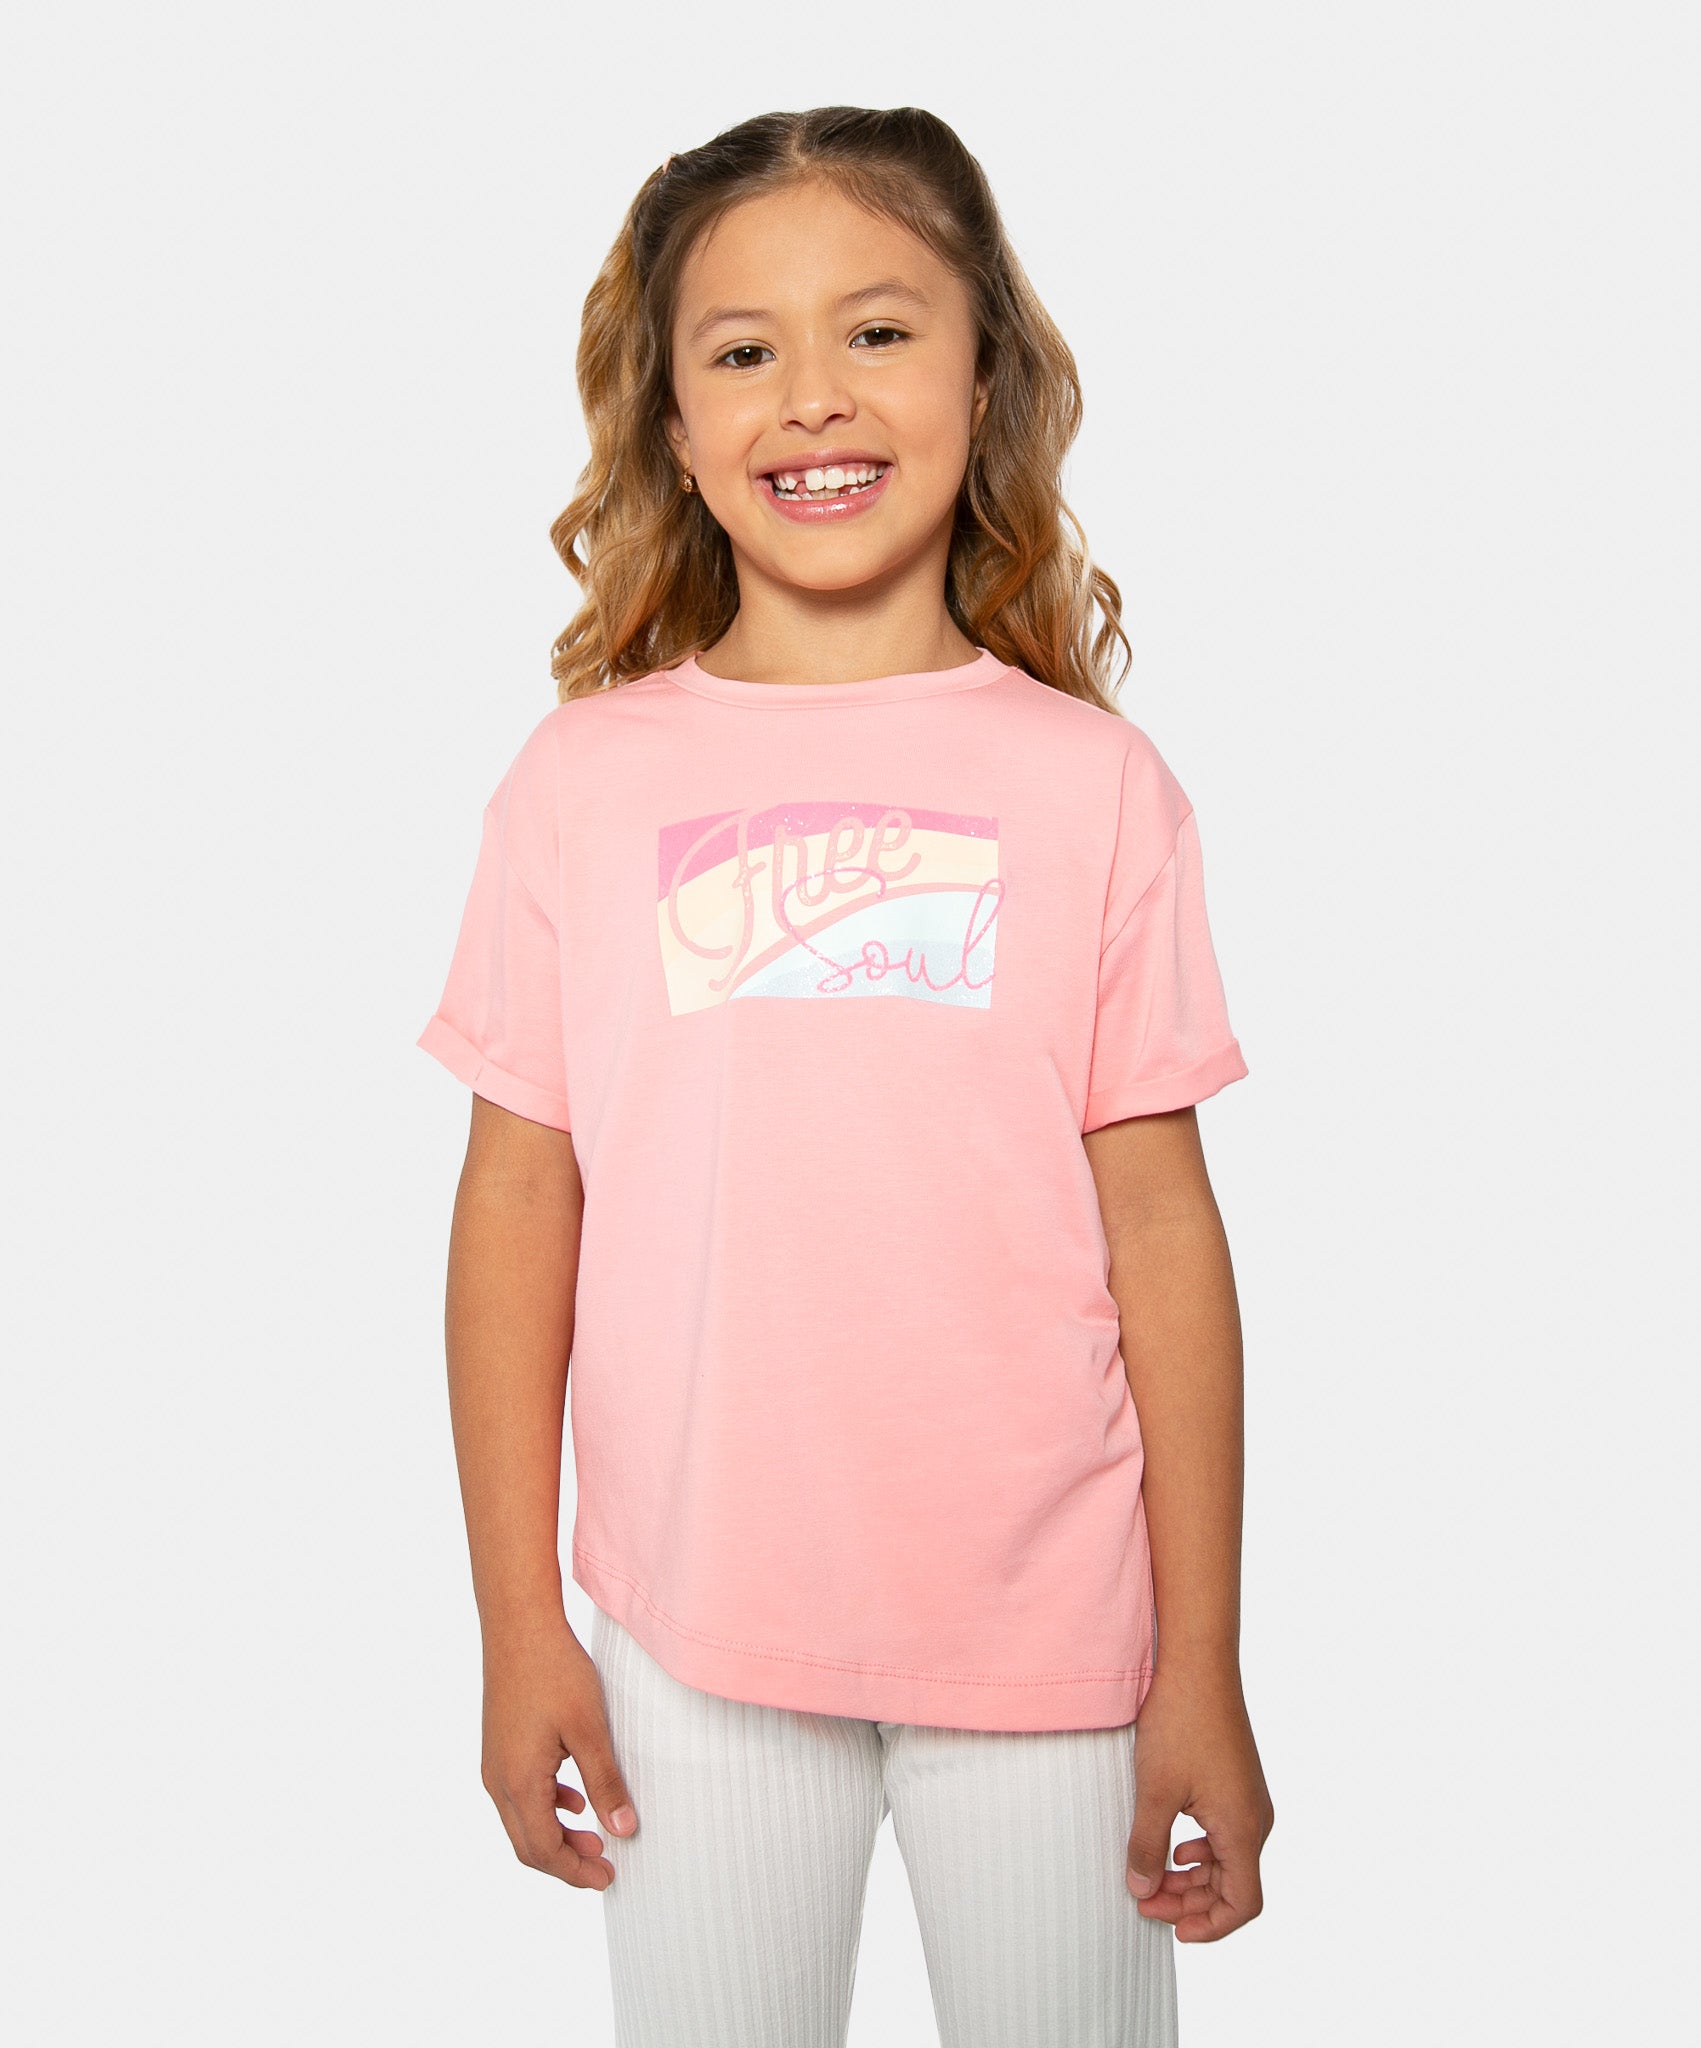 Camiseta de Frozen marfil manga corta para niña